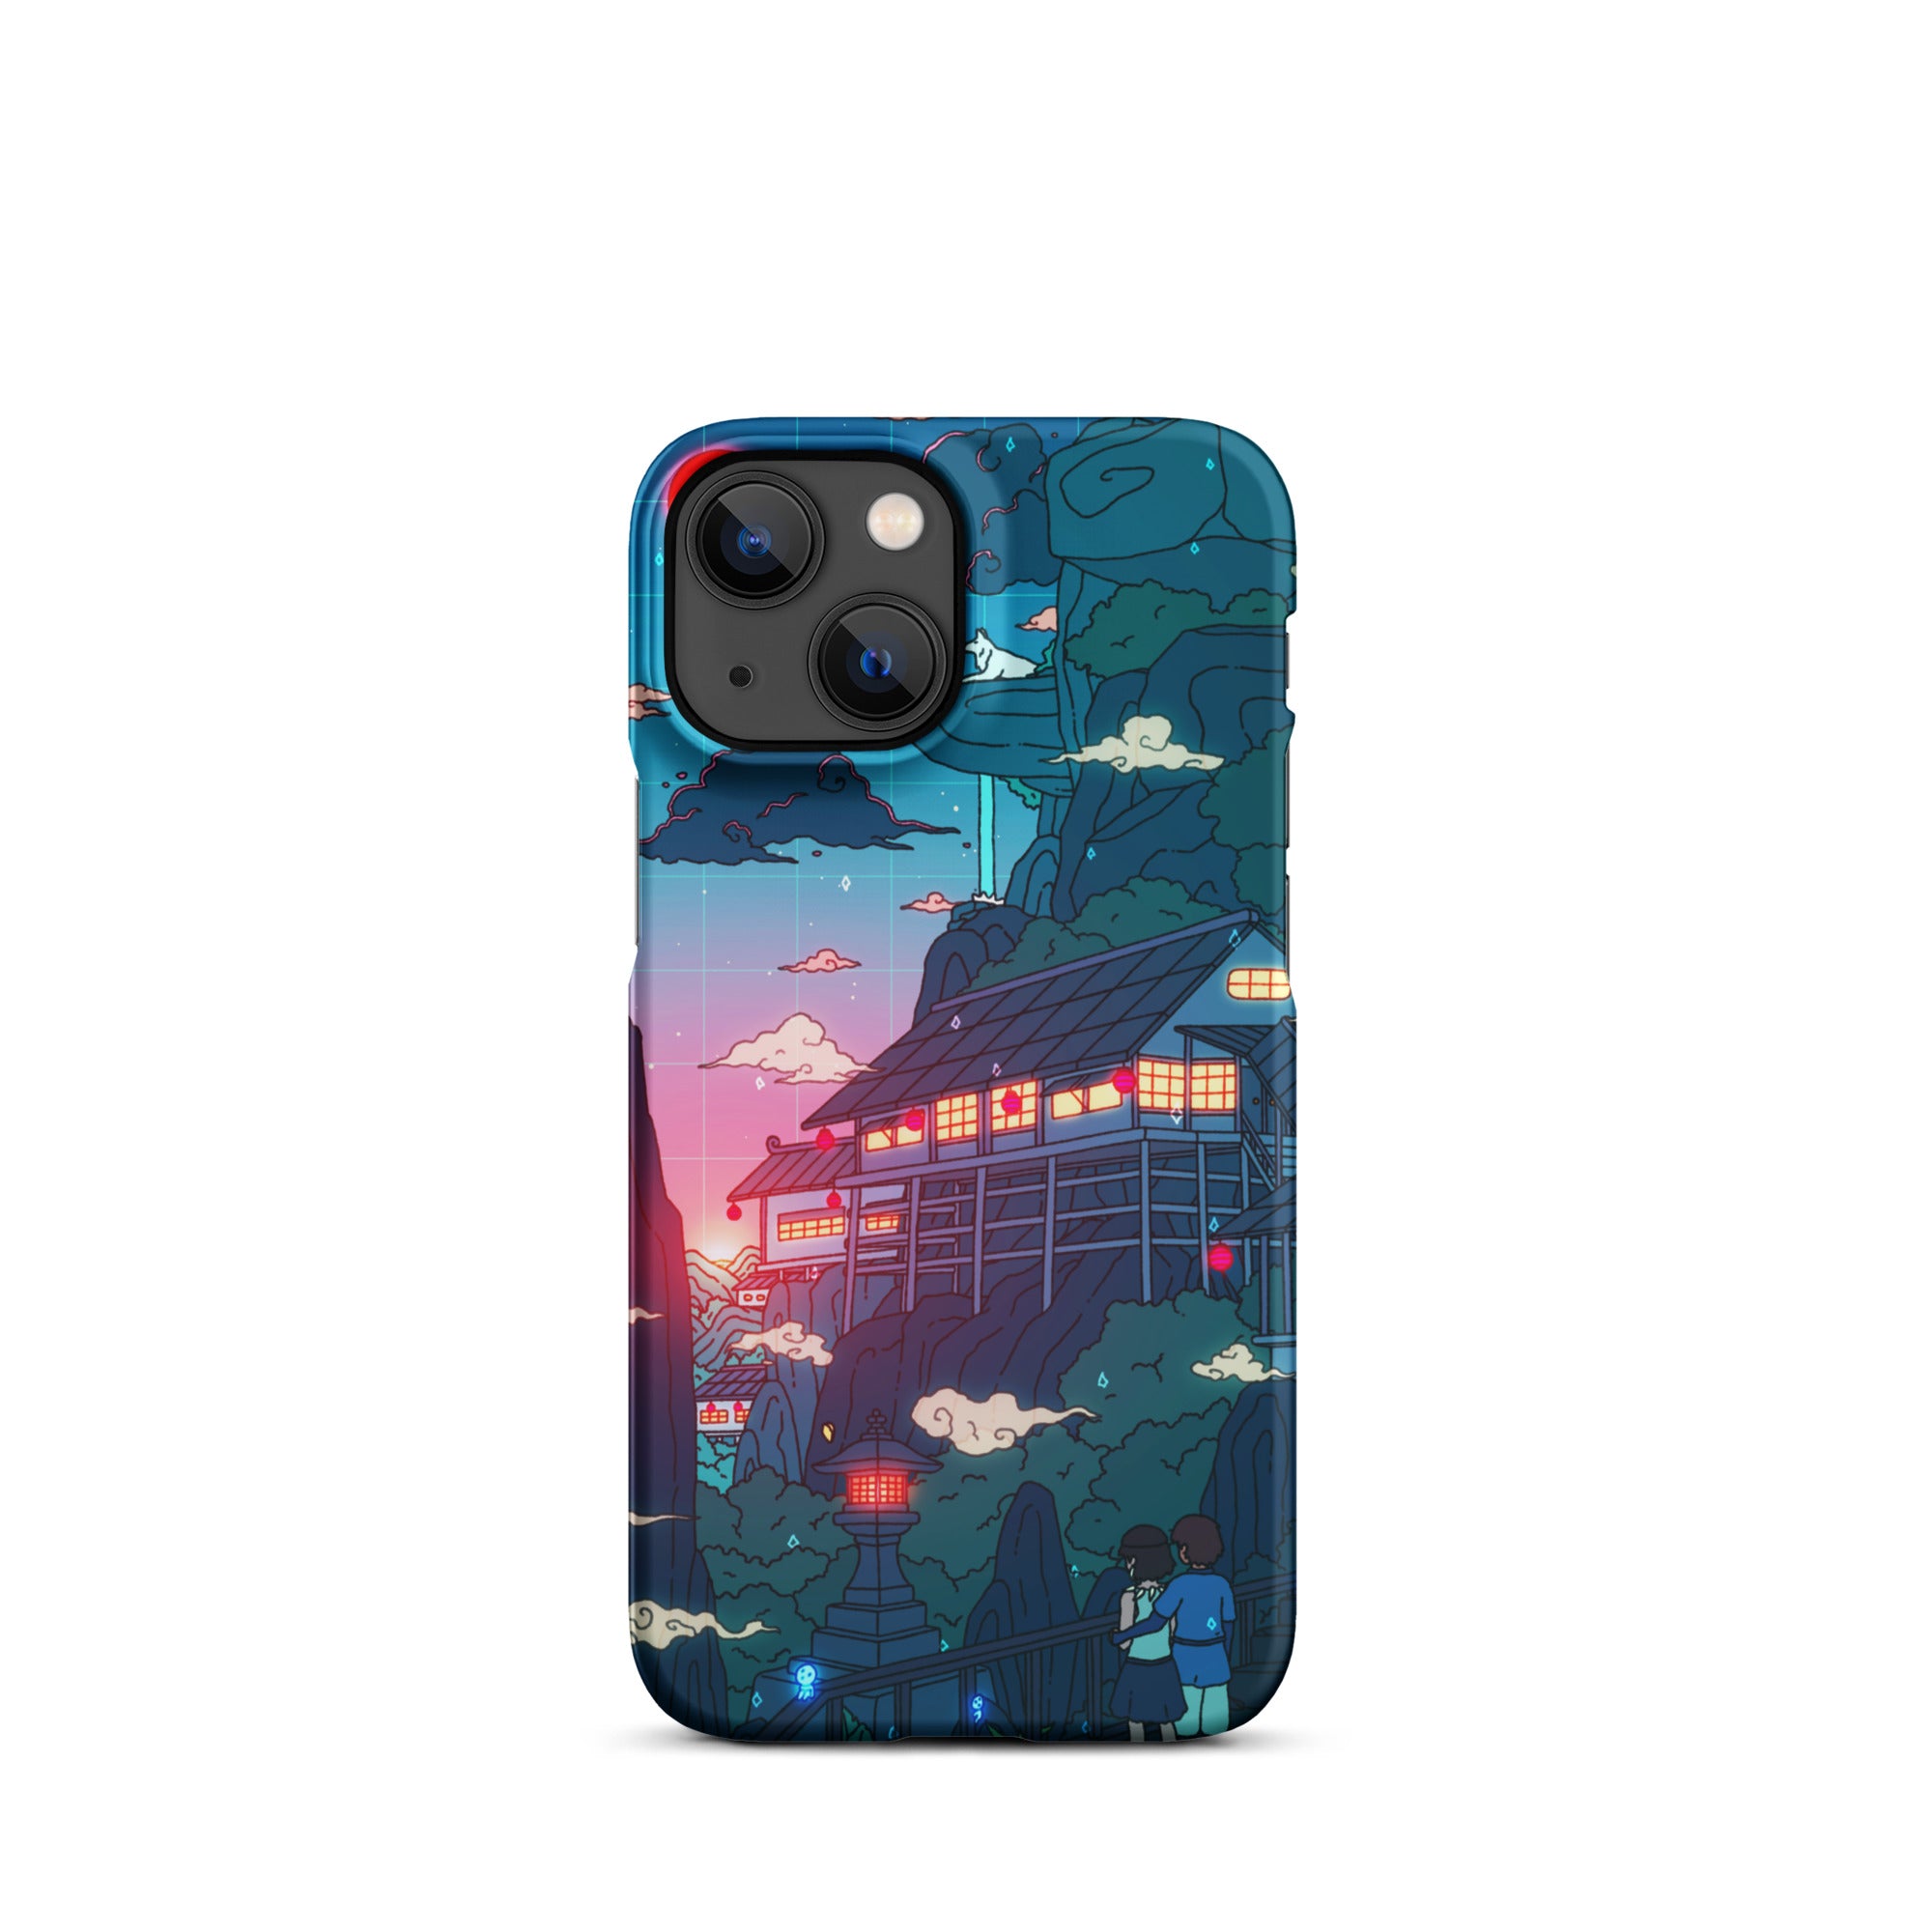 Mononoke Sunset iPhone Case